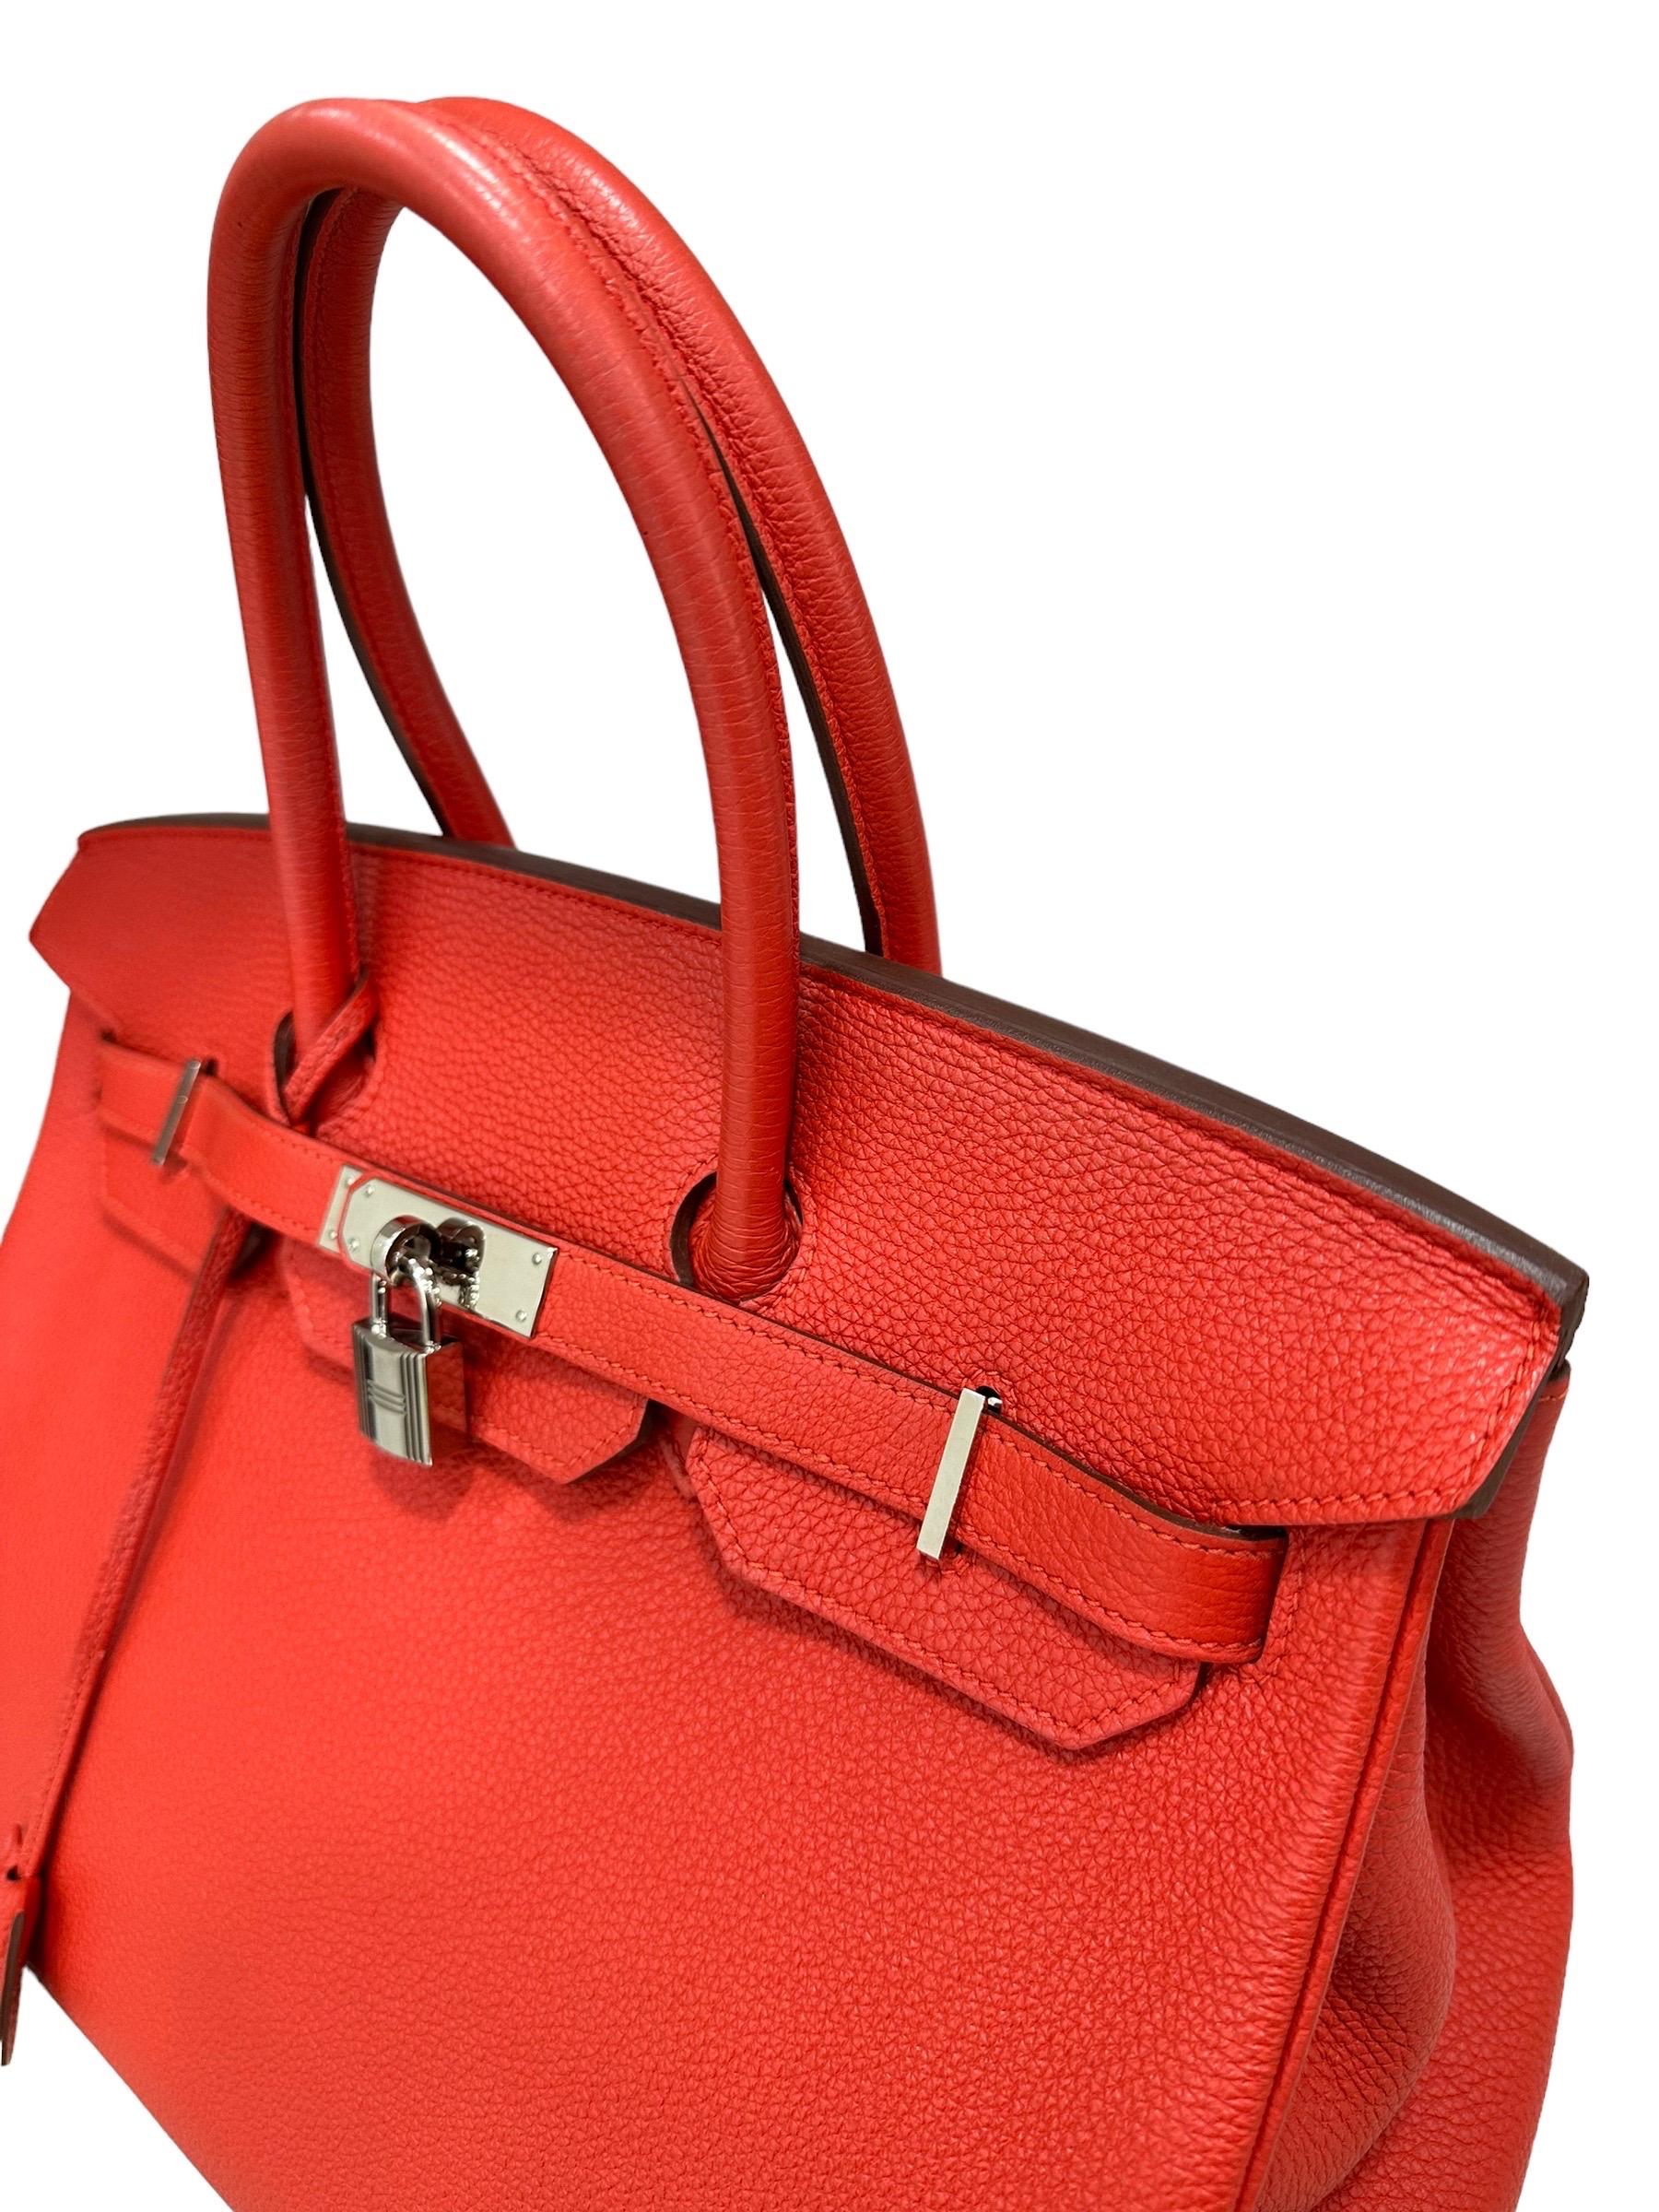 2011 Hermès Birkin 35 Togo Leather Rouge Capucine Top Handle Bag For Sale 11